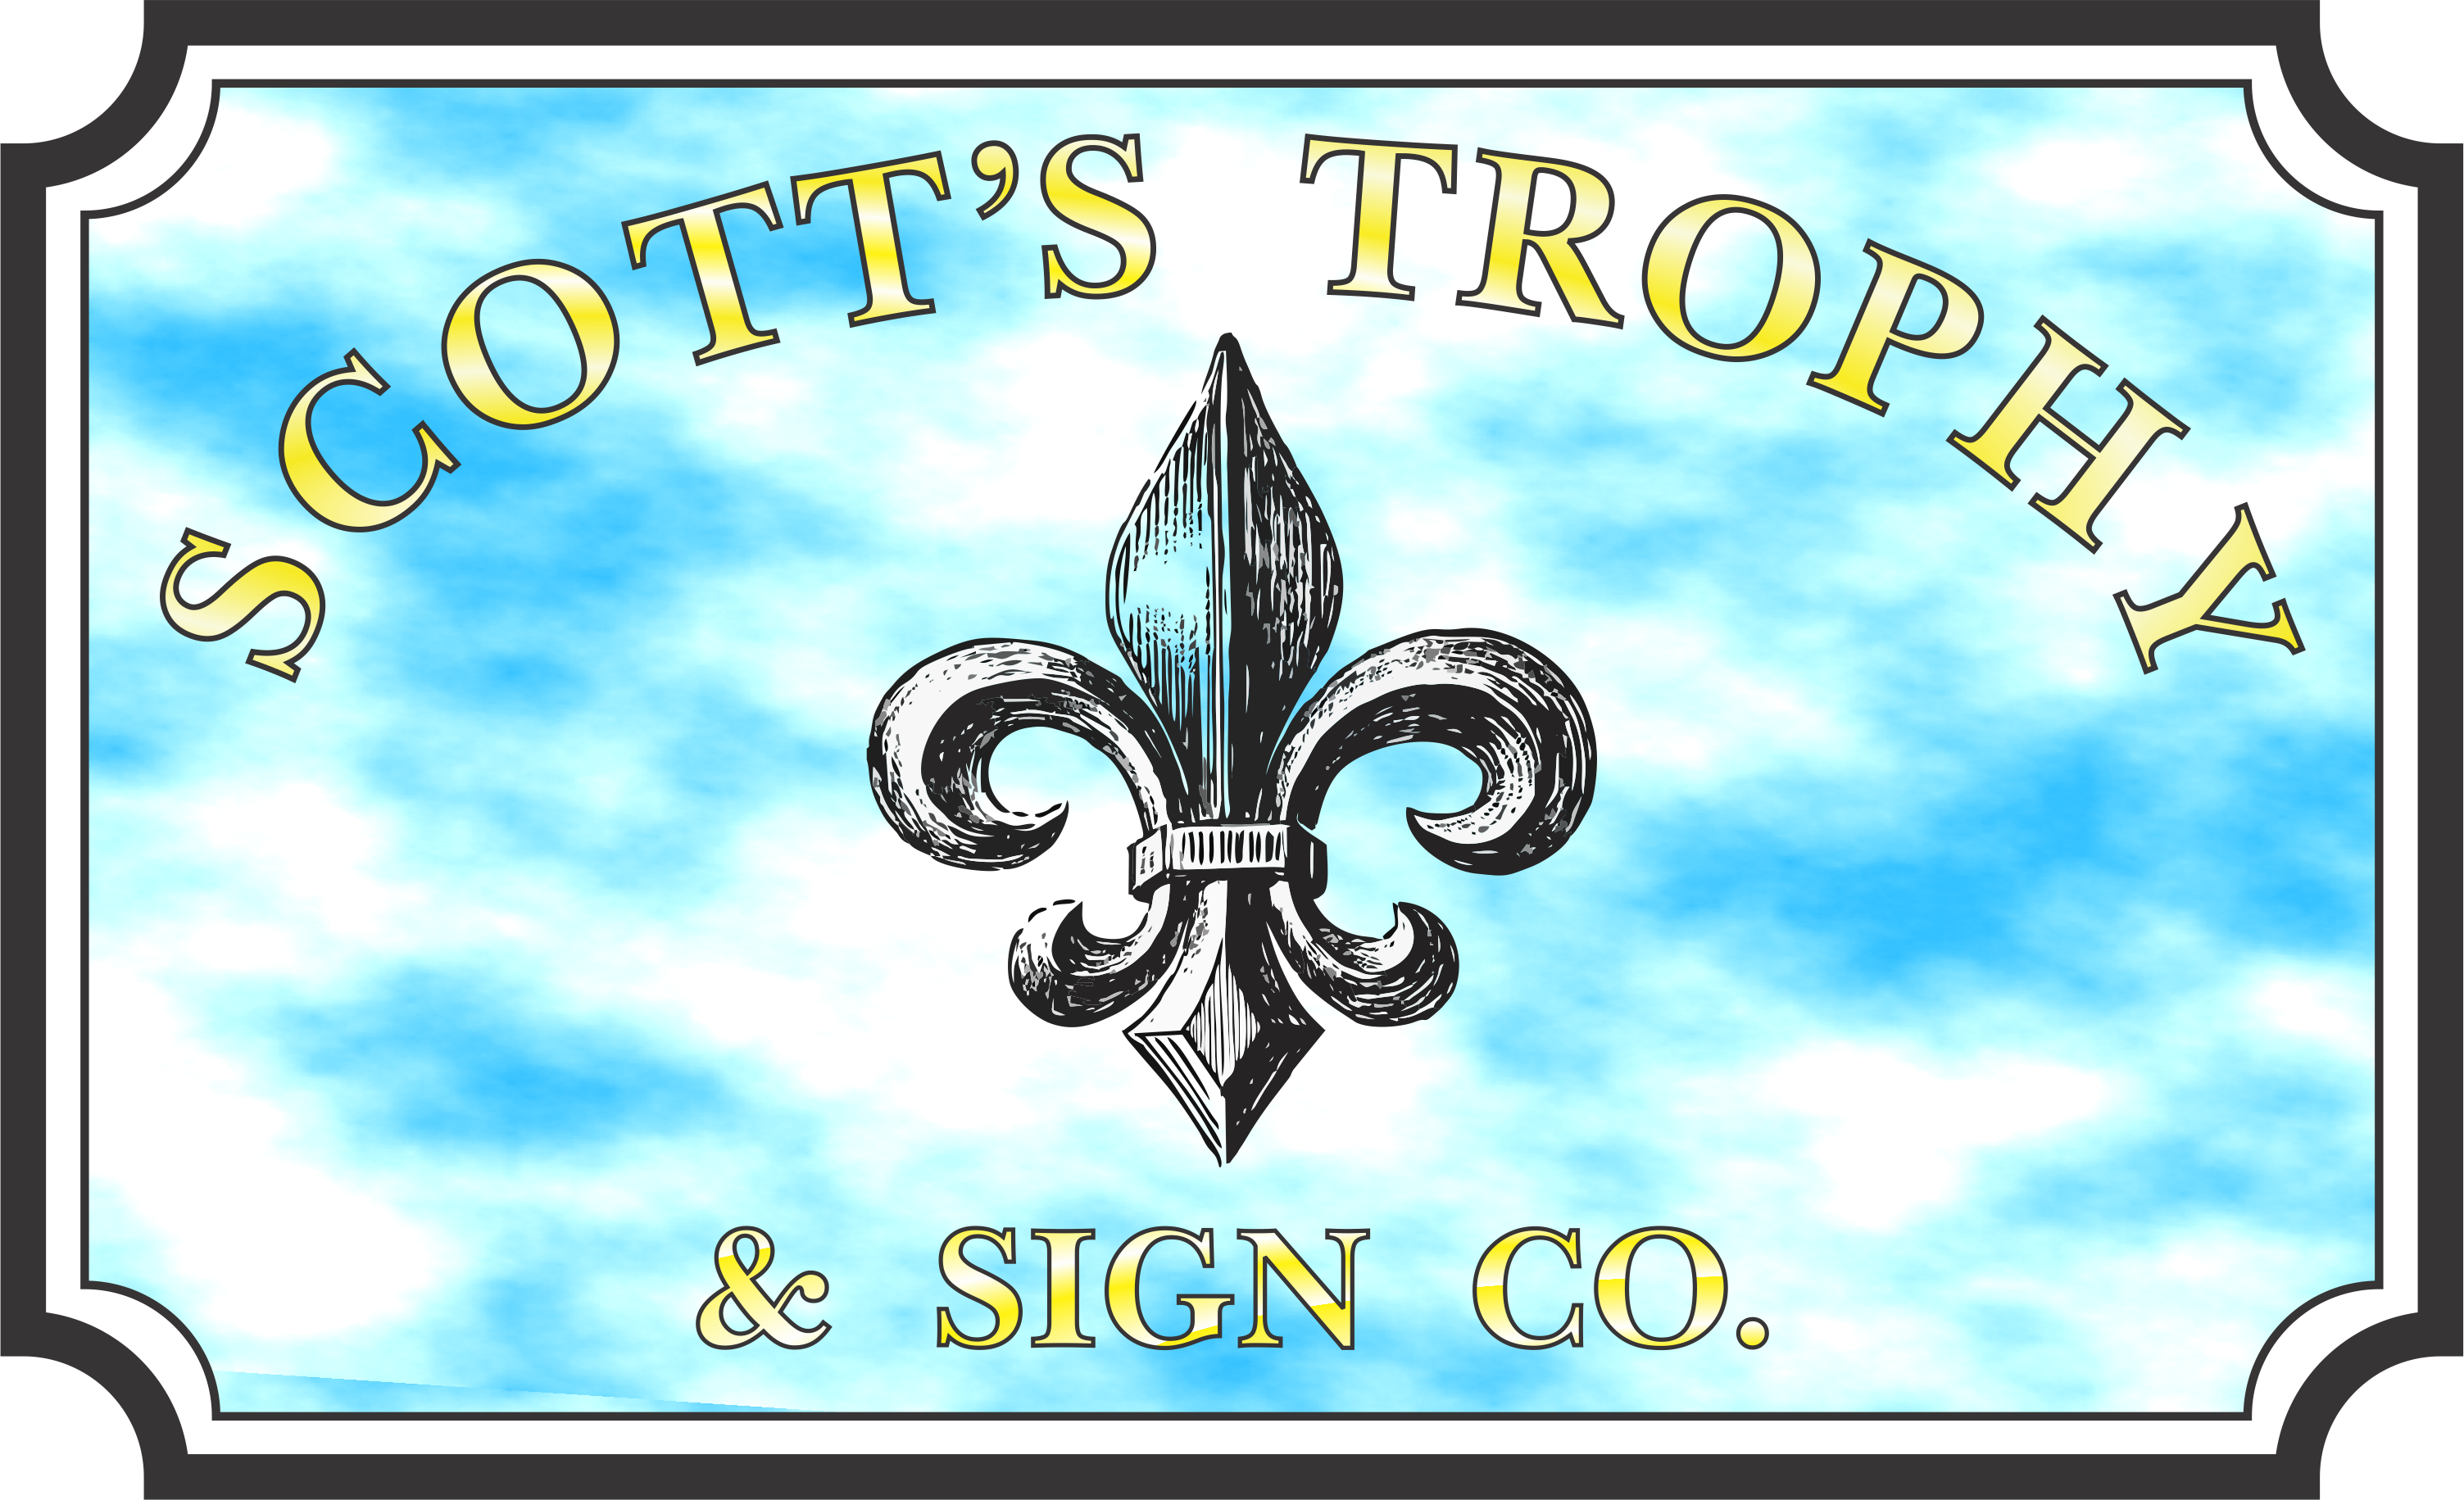 Scott's Trophy & Sign Co